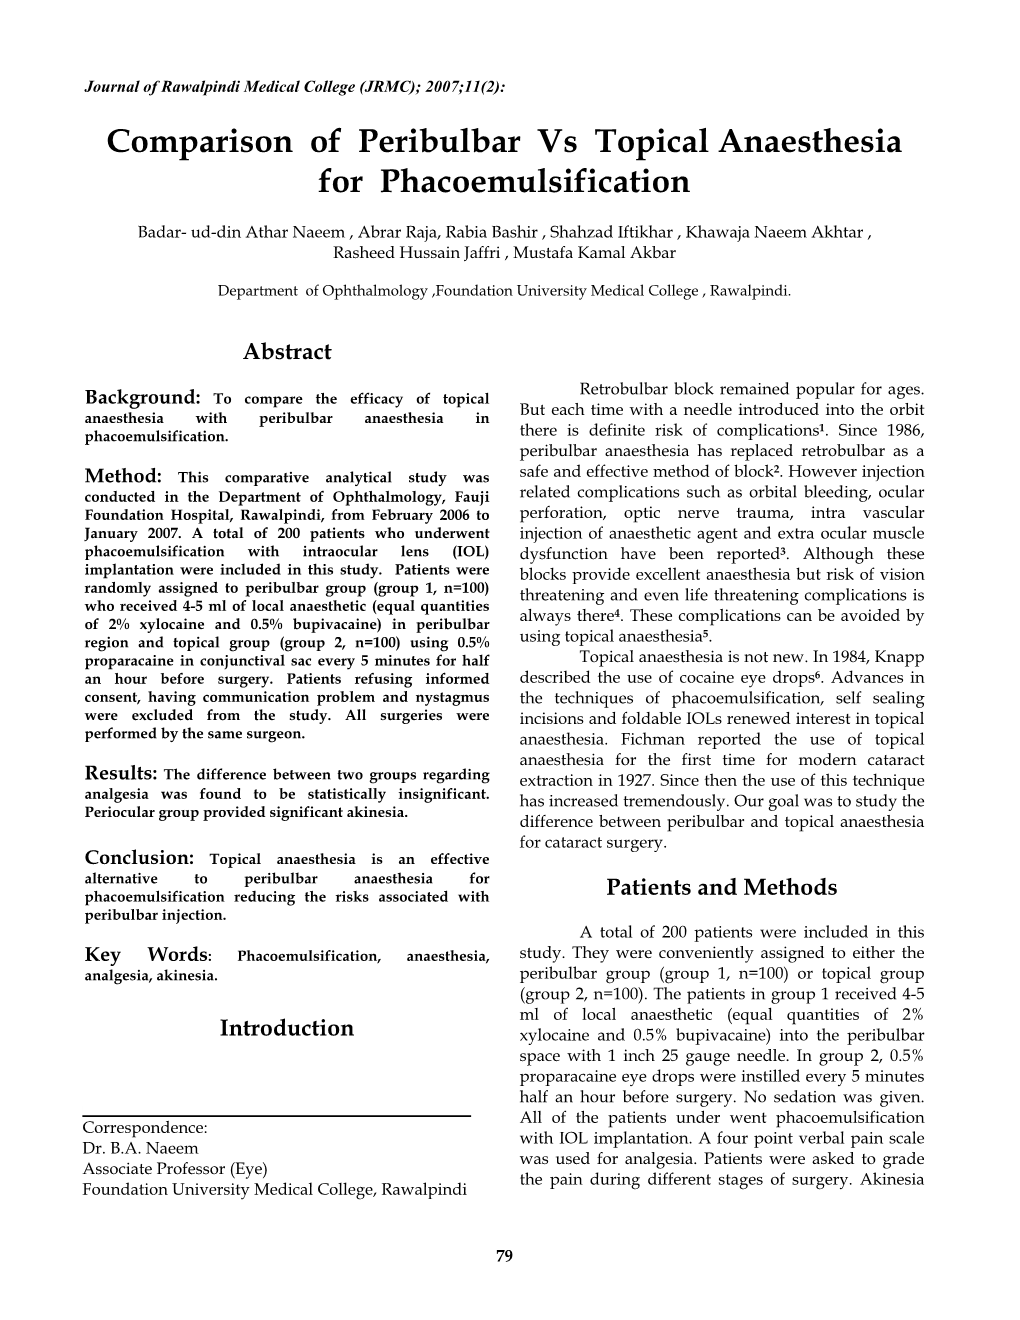 Comparison of Peribulbar Vs Topical Anaesthesia for Phacoemulsification